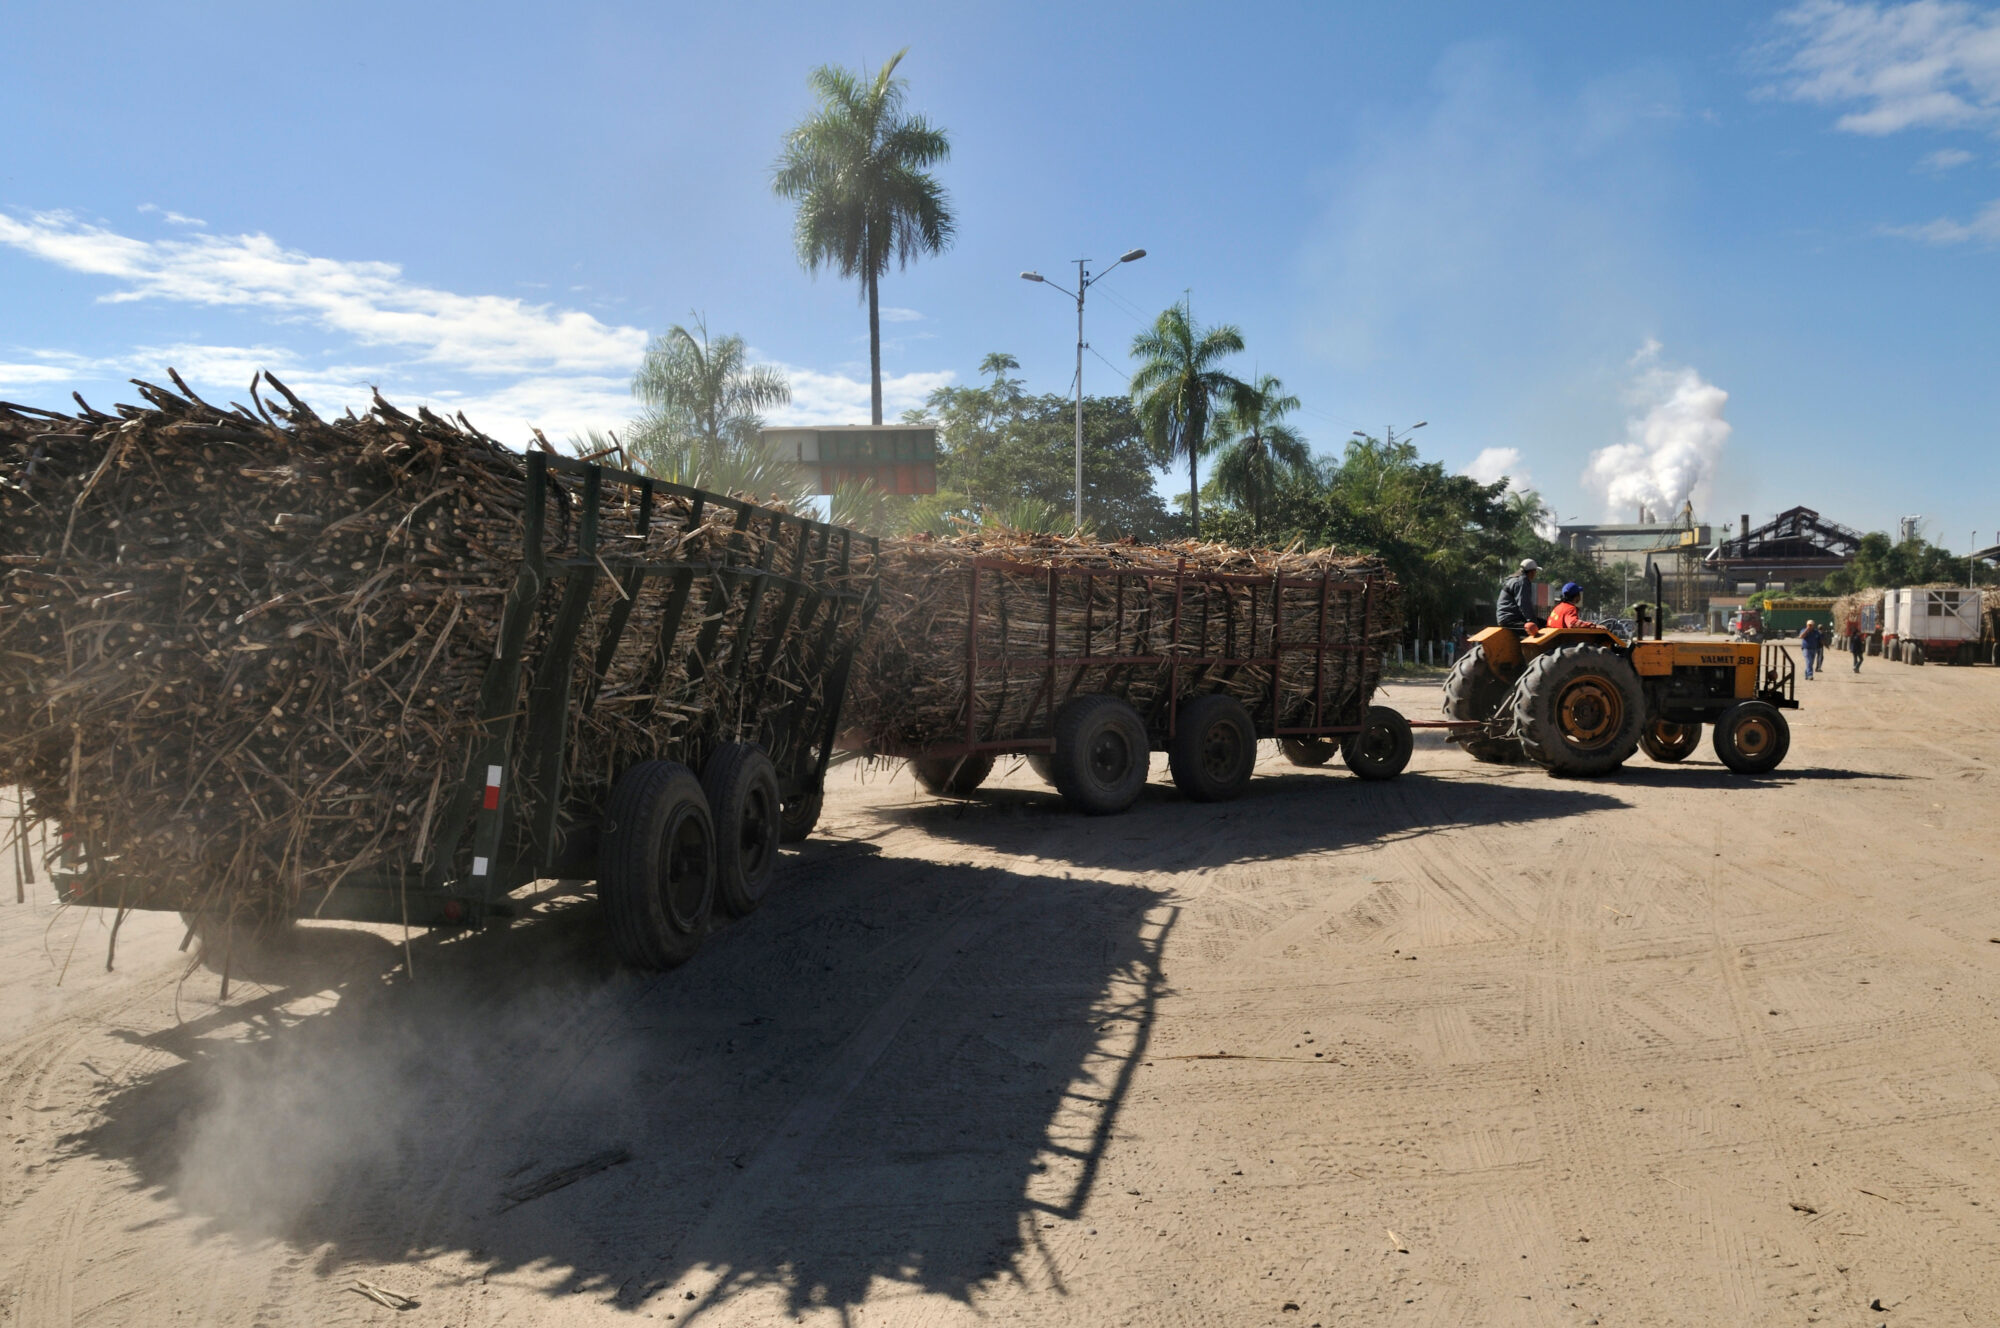 A truckload of sugar cane outside a factory in Santa Cruz, Bolivia.